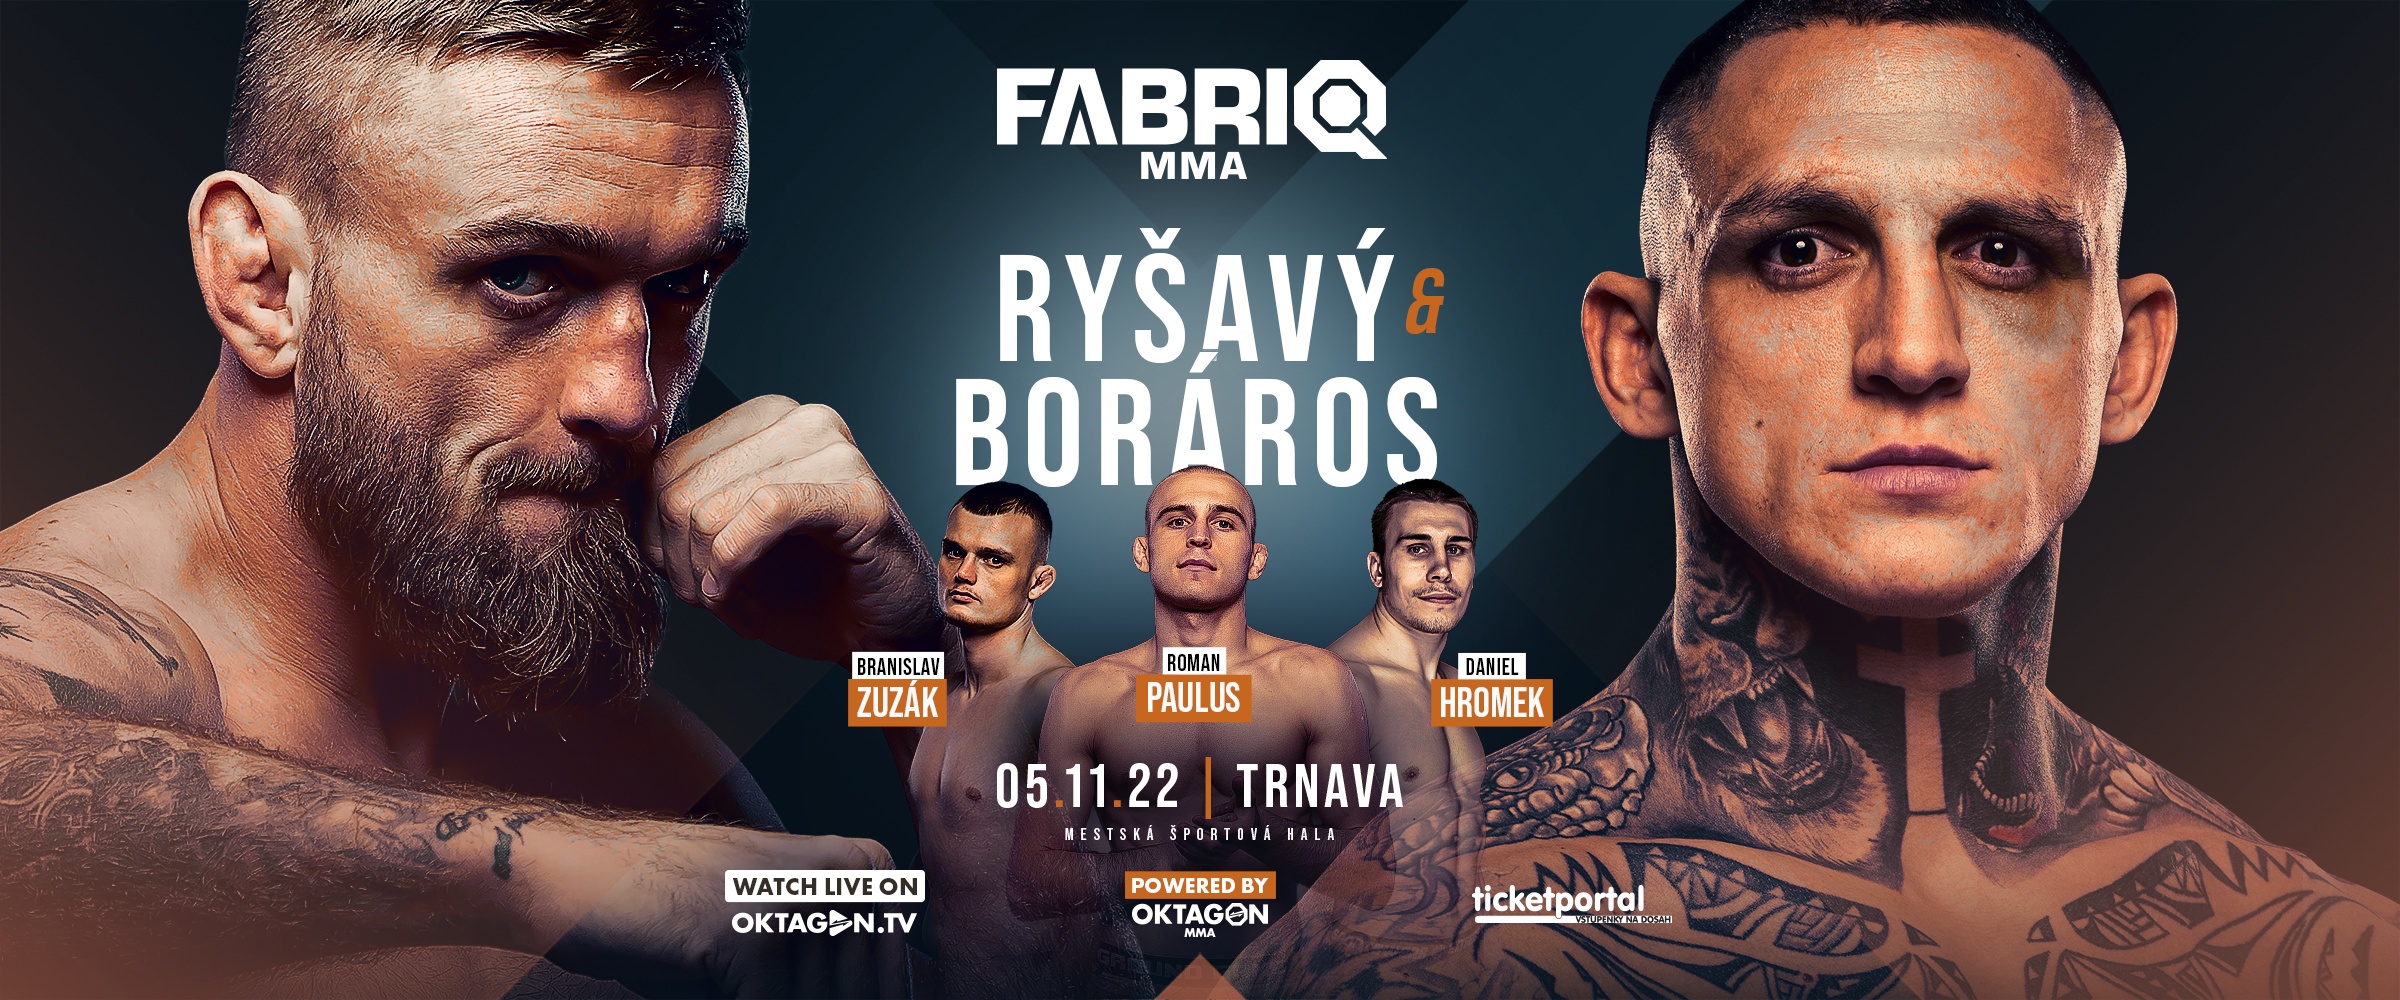 FABRIQ MMA OKTAGON TV Pay Per View